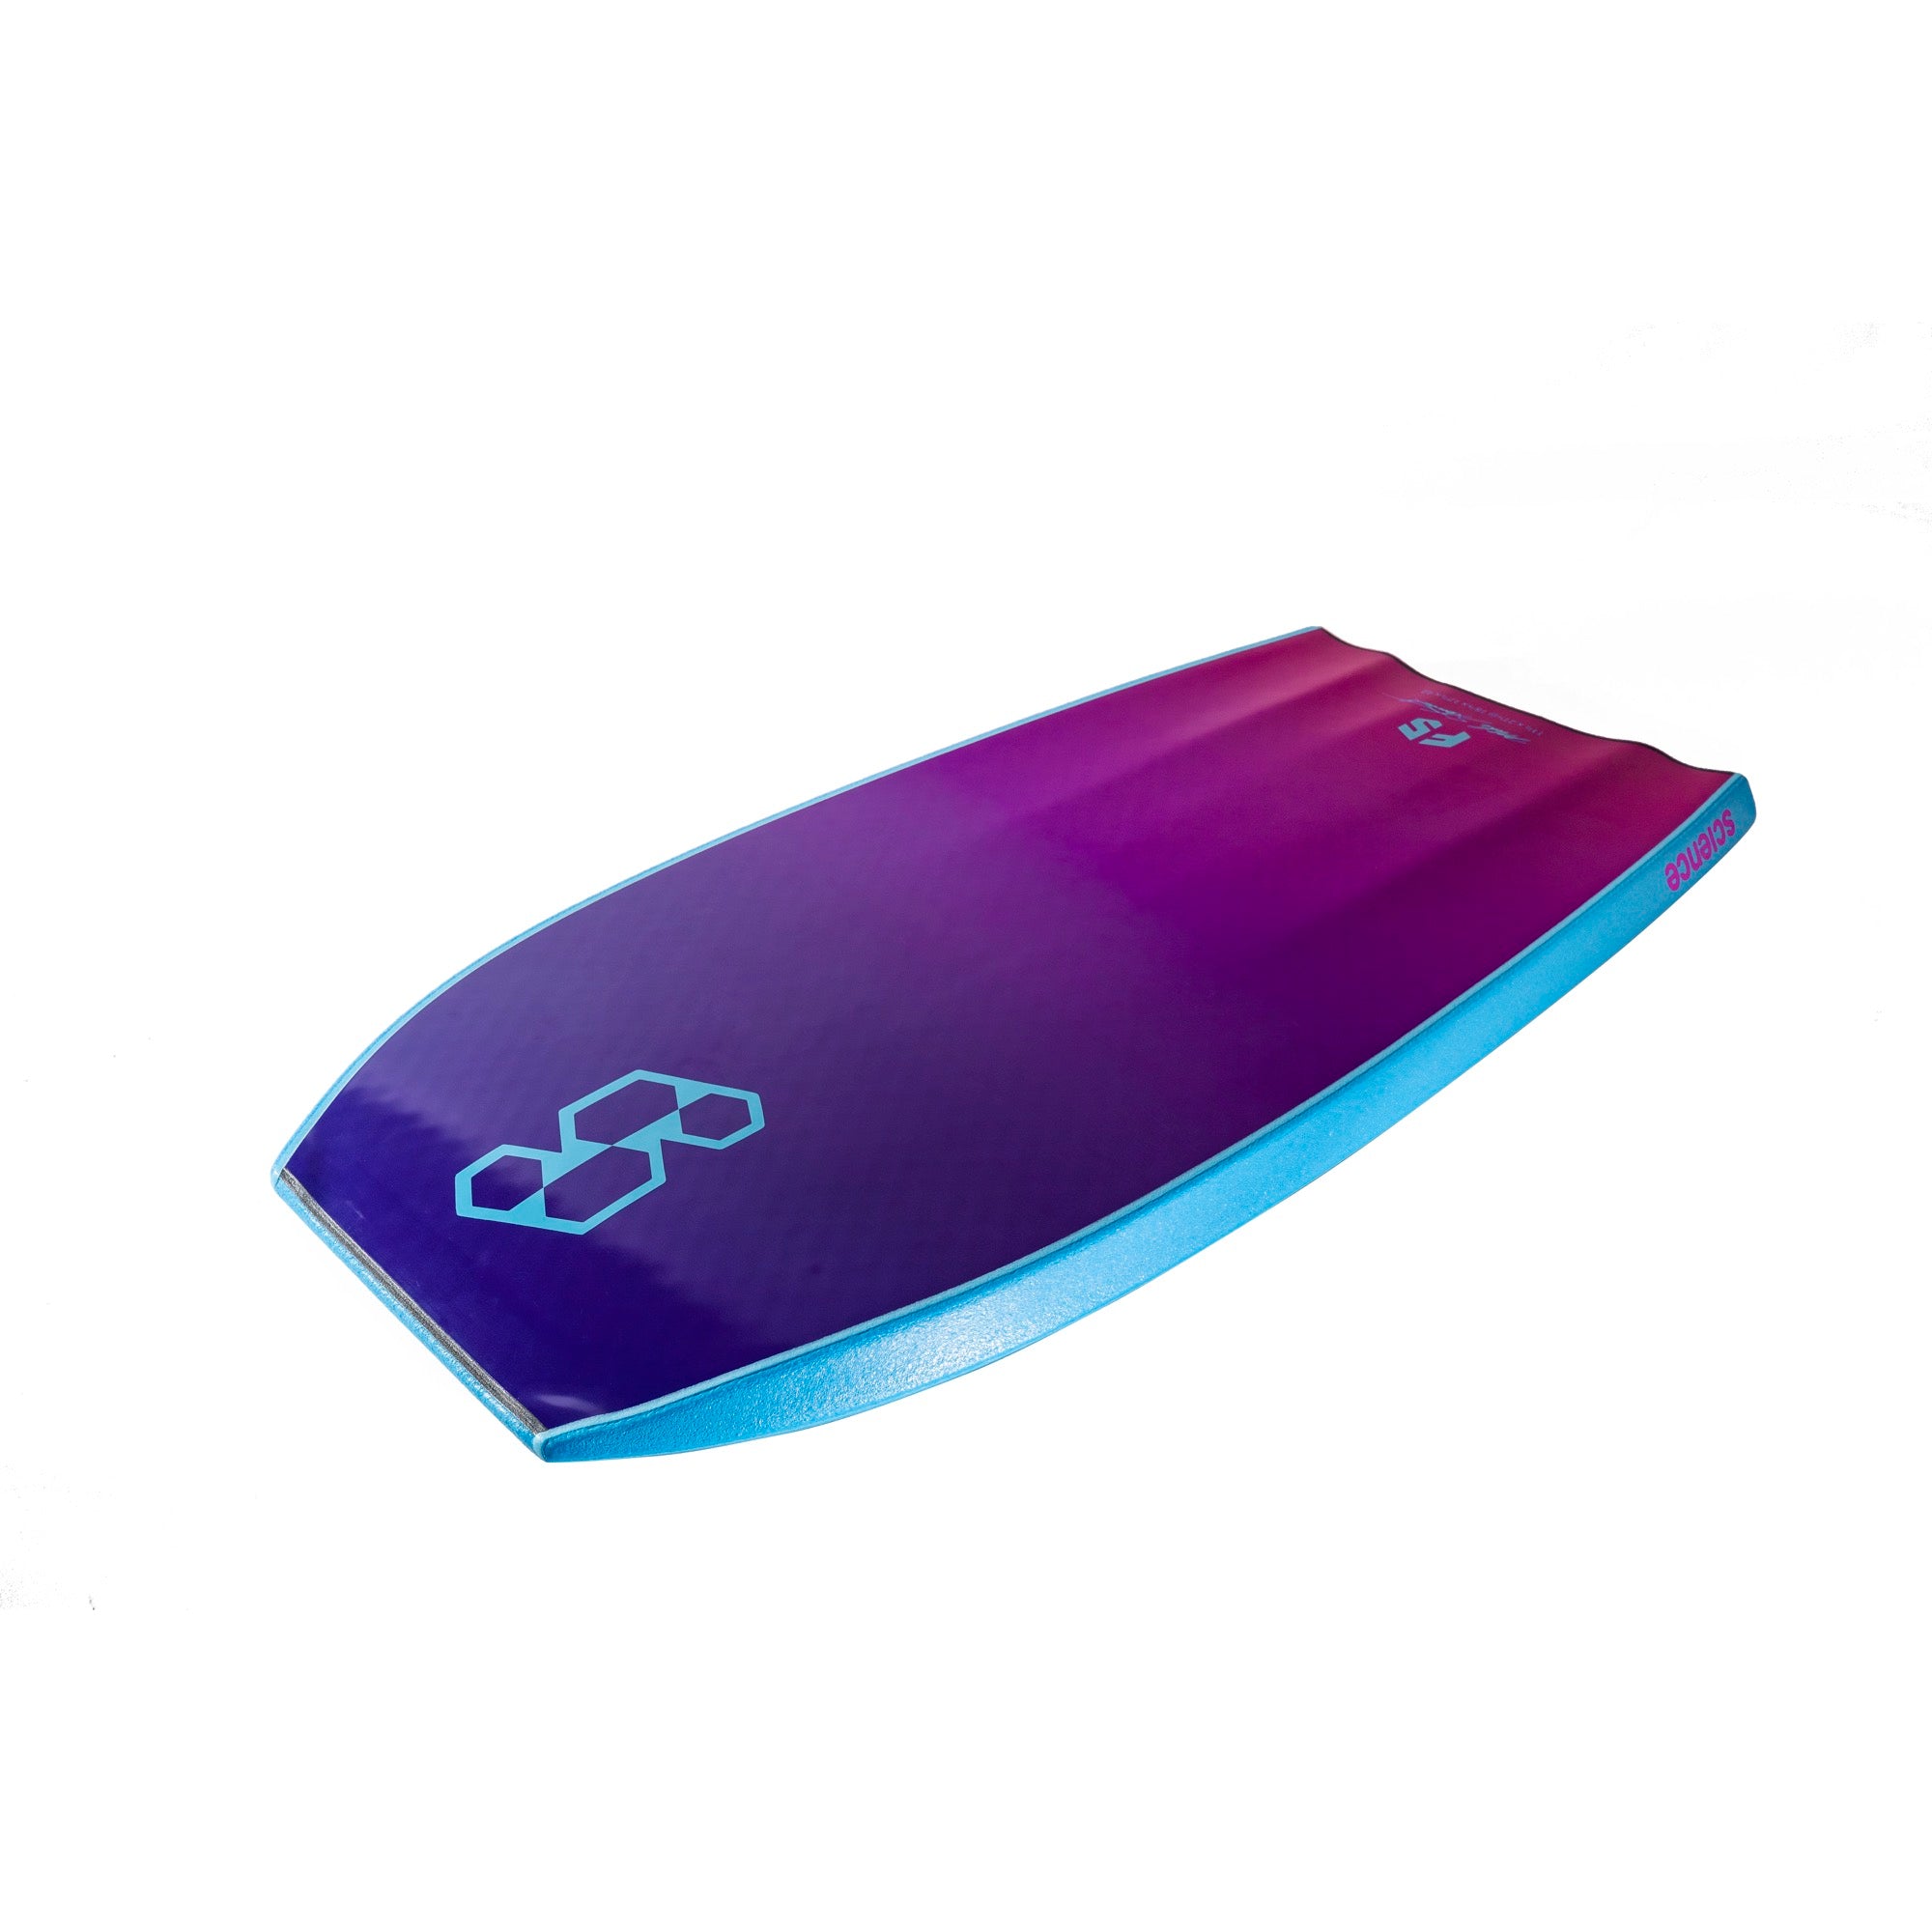 Science Bodyboard - Pro Flare Serie F5 (PP) - Tri Quad Vent - Aqua / Pink